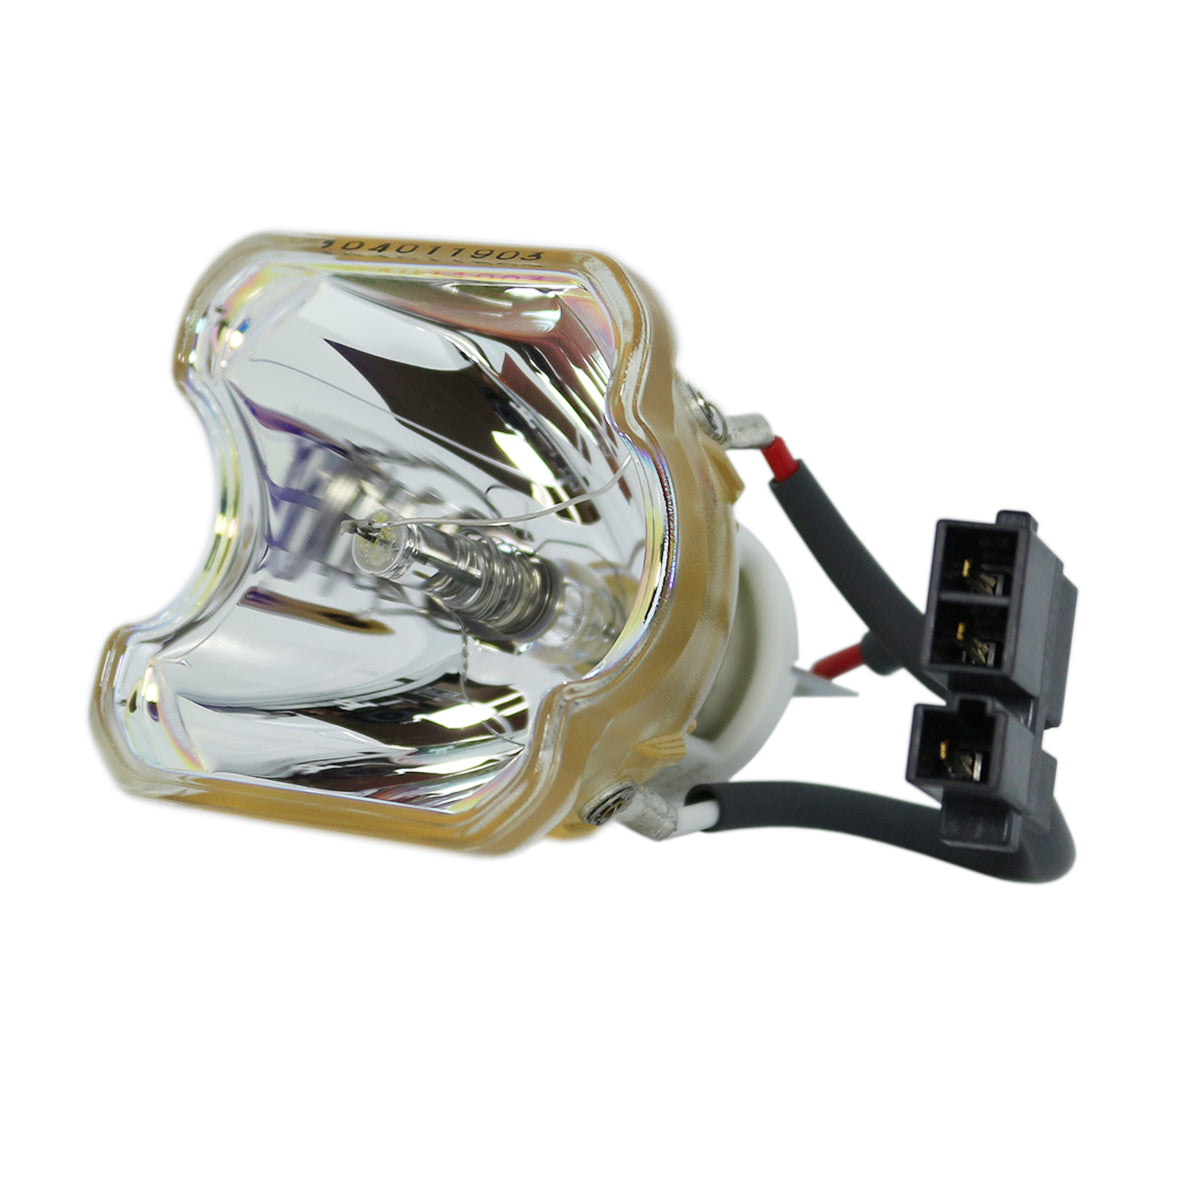 Smartboard 01-00161 Ushio Projector Bare Lamp